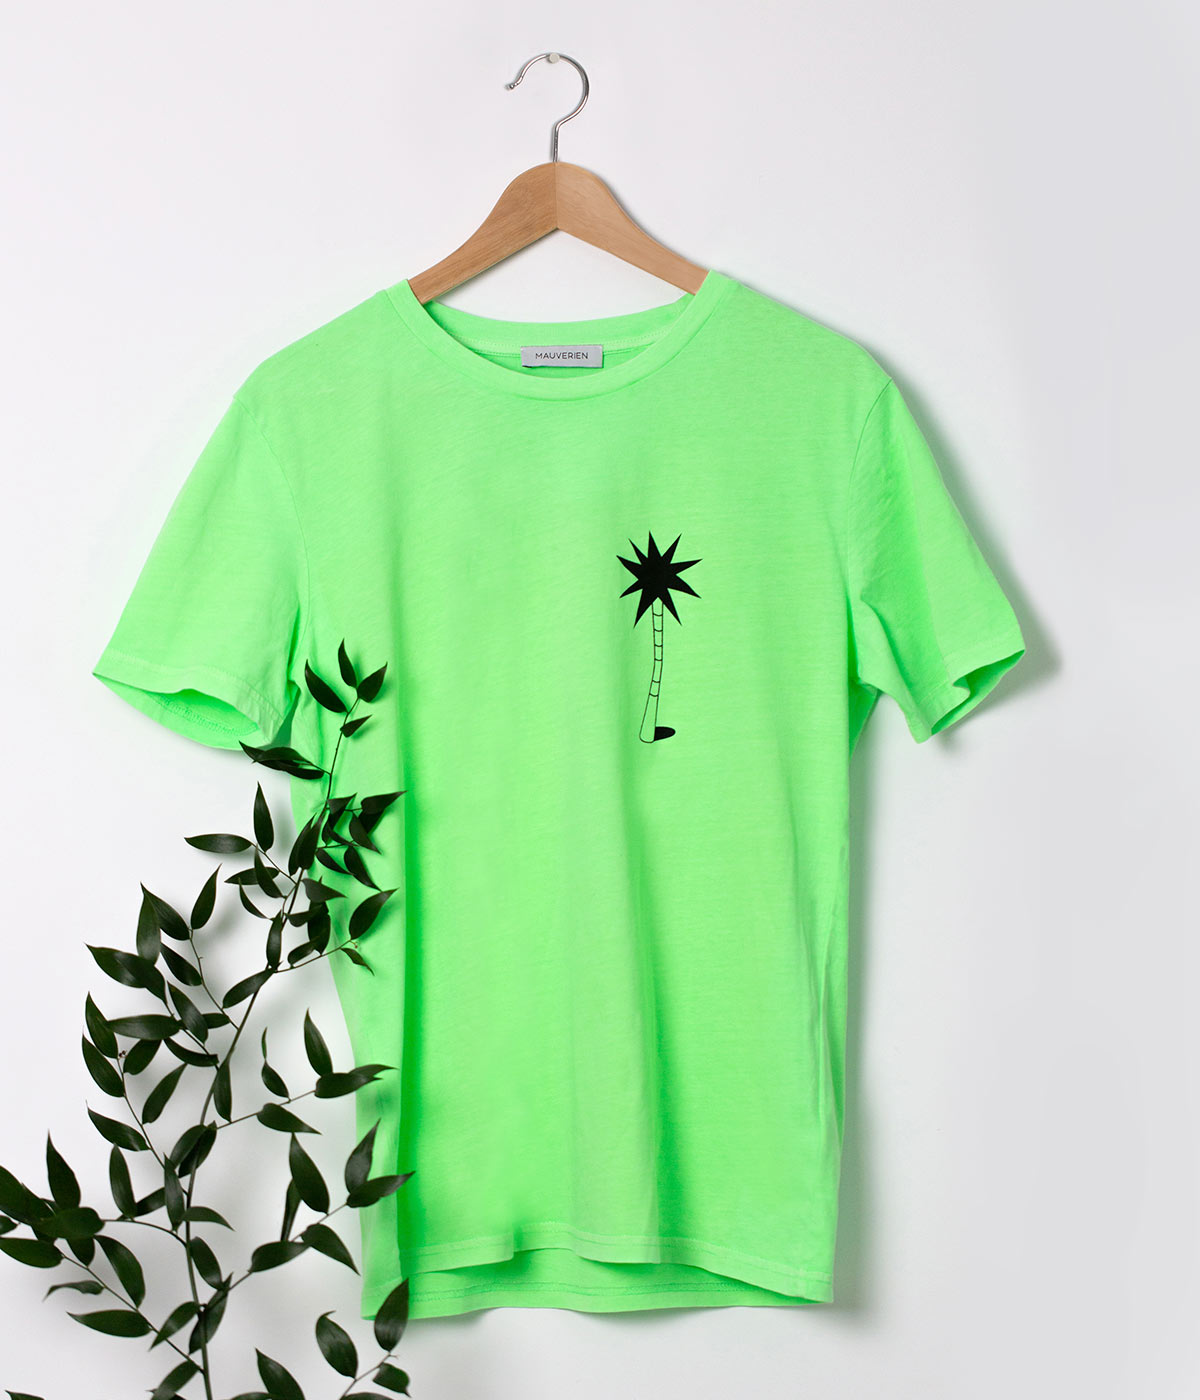 Neon green cotton t-shirt with black palm tree print by Romanian brand Mauverien.